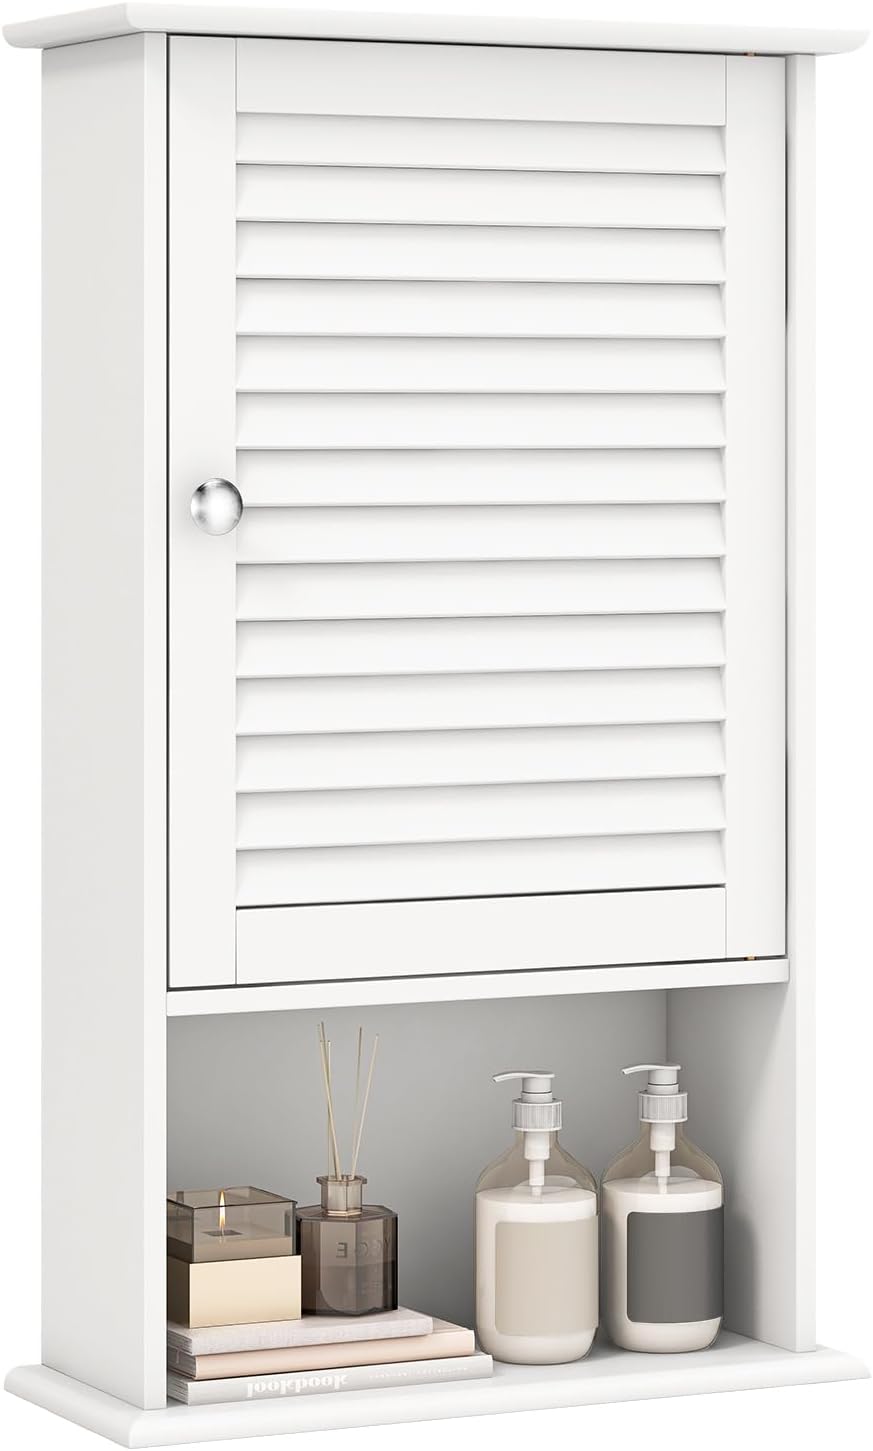 Giantex Bathroom Wall Mount Cabinet - Over The Toilet Storage Organizer with Single Door and Adjustable Shel